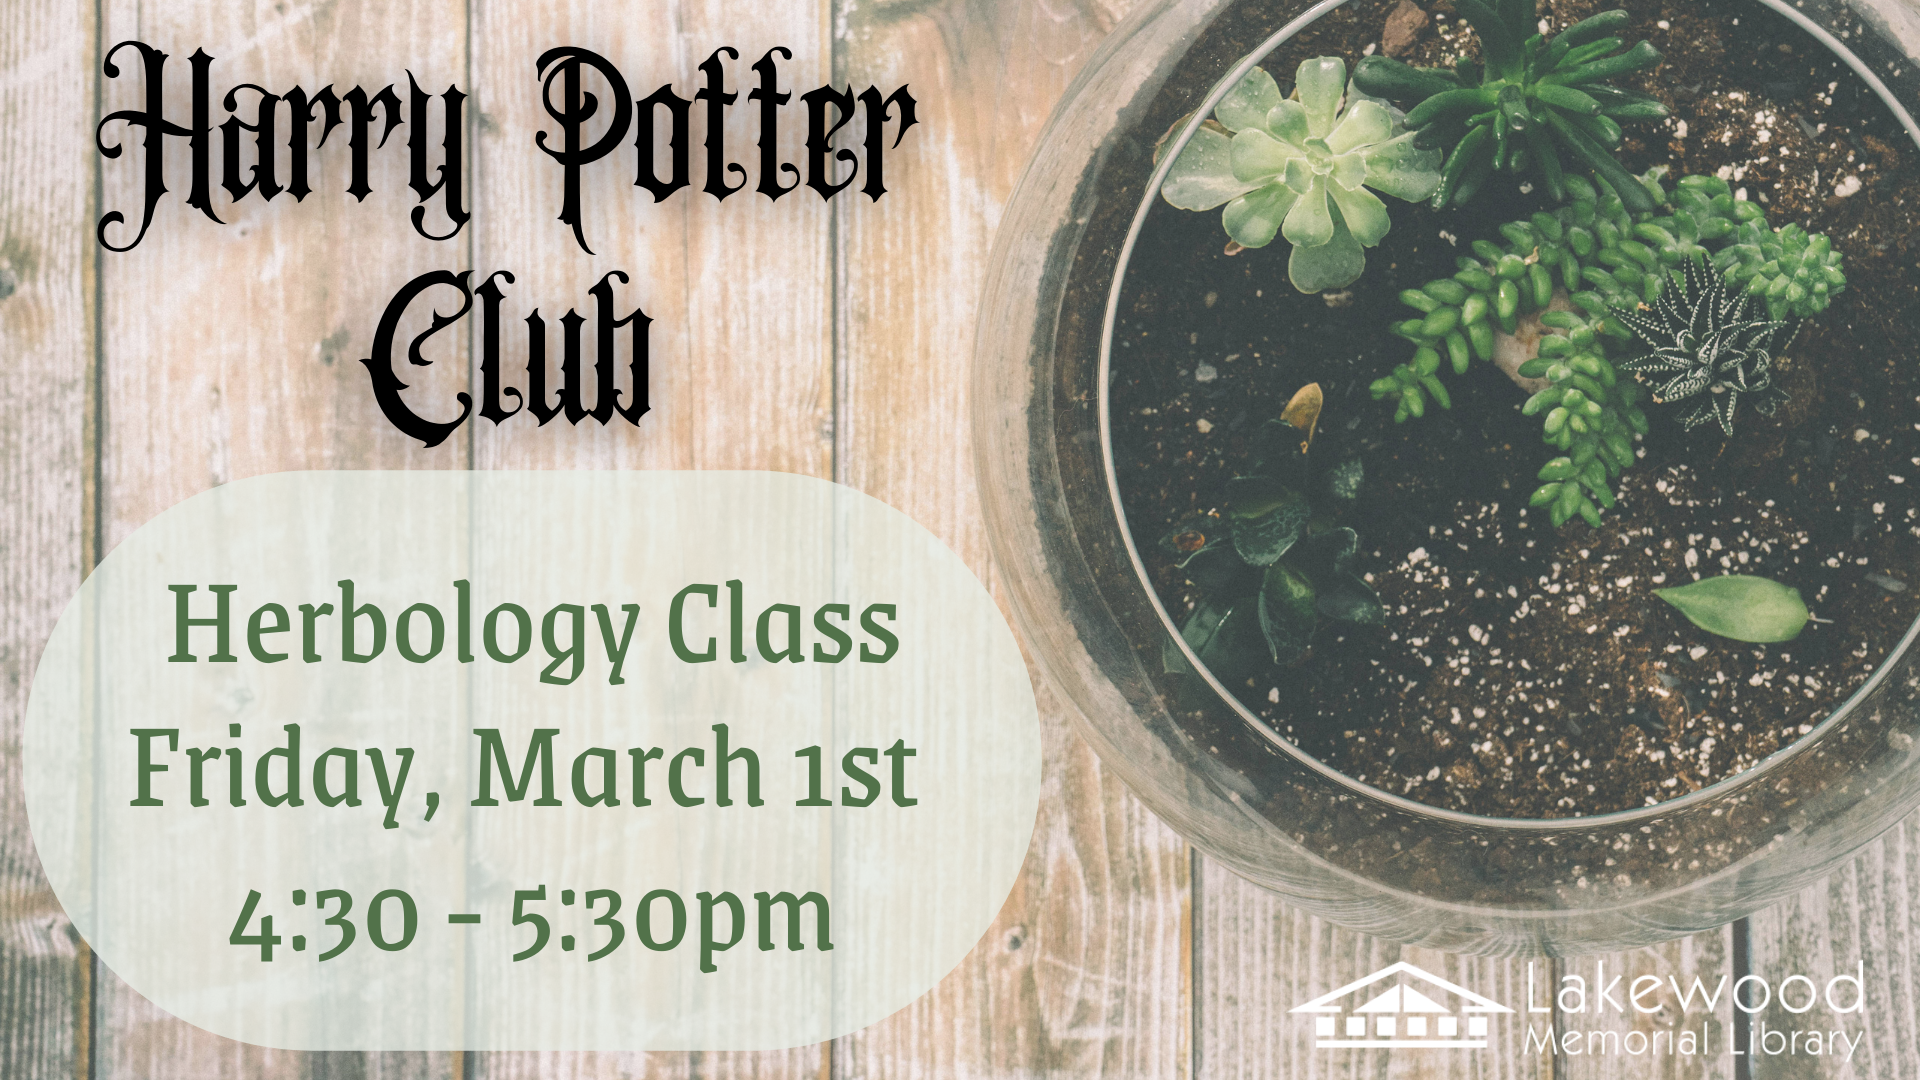 Harry Potter Club: Herbology